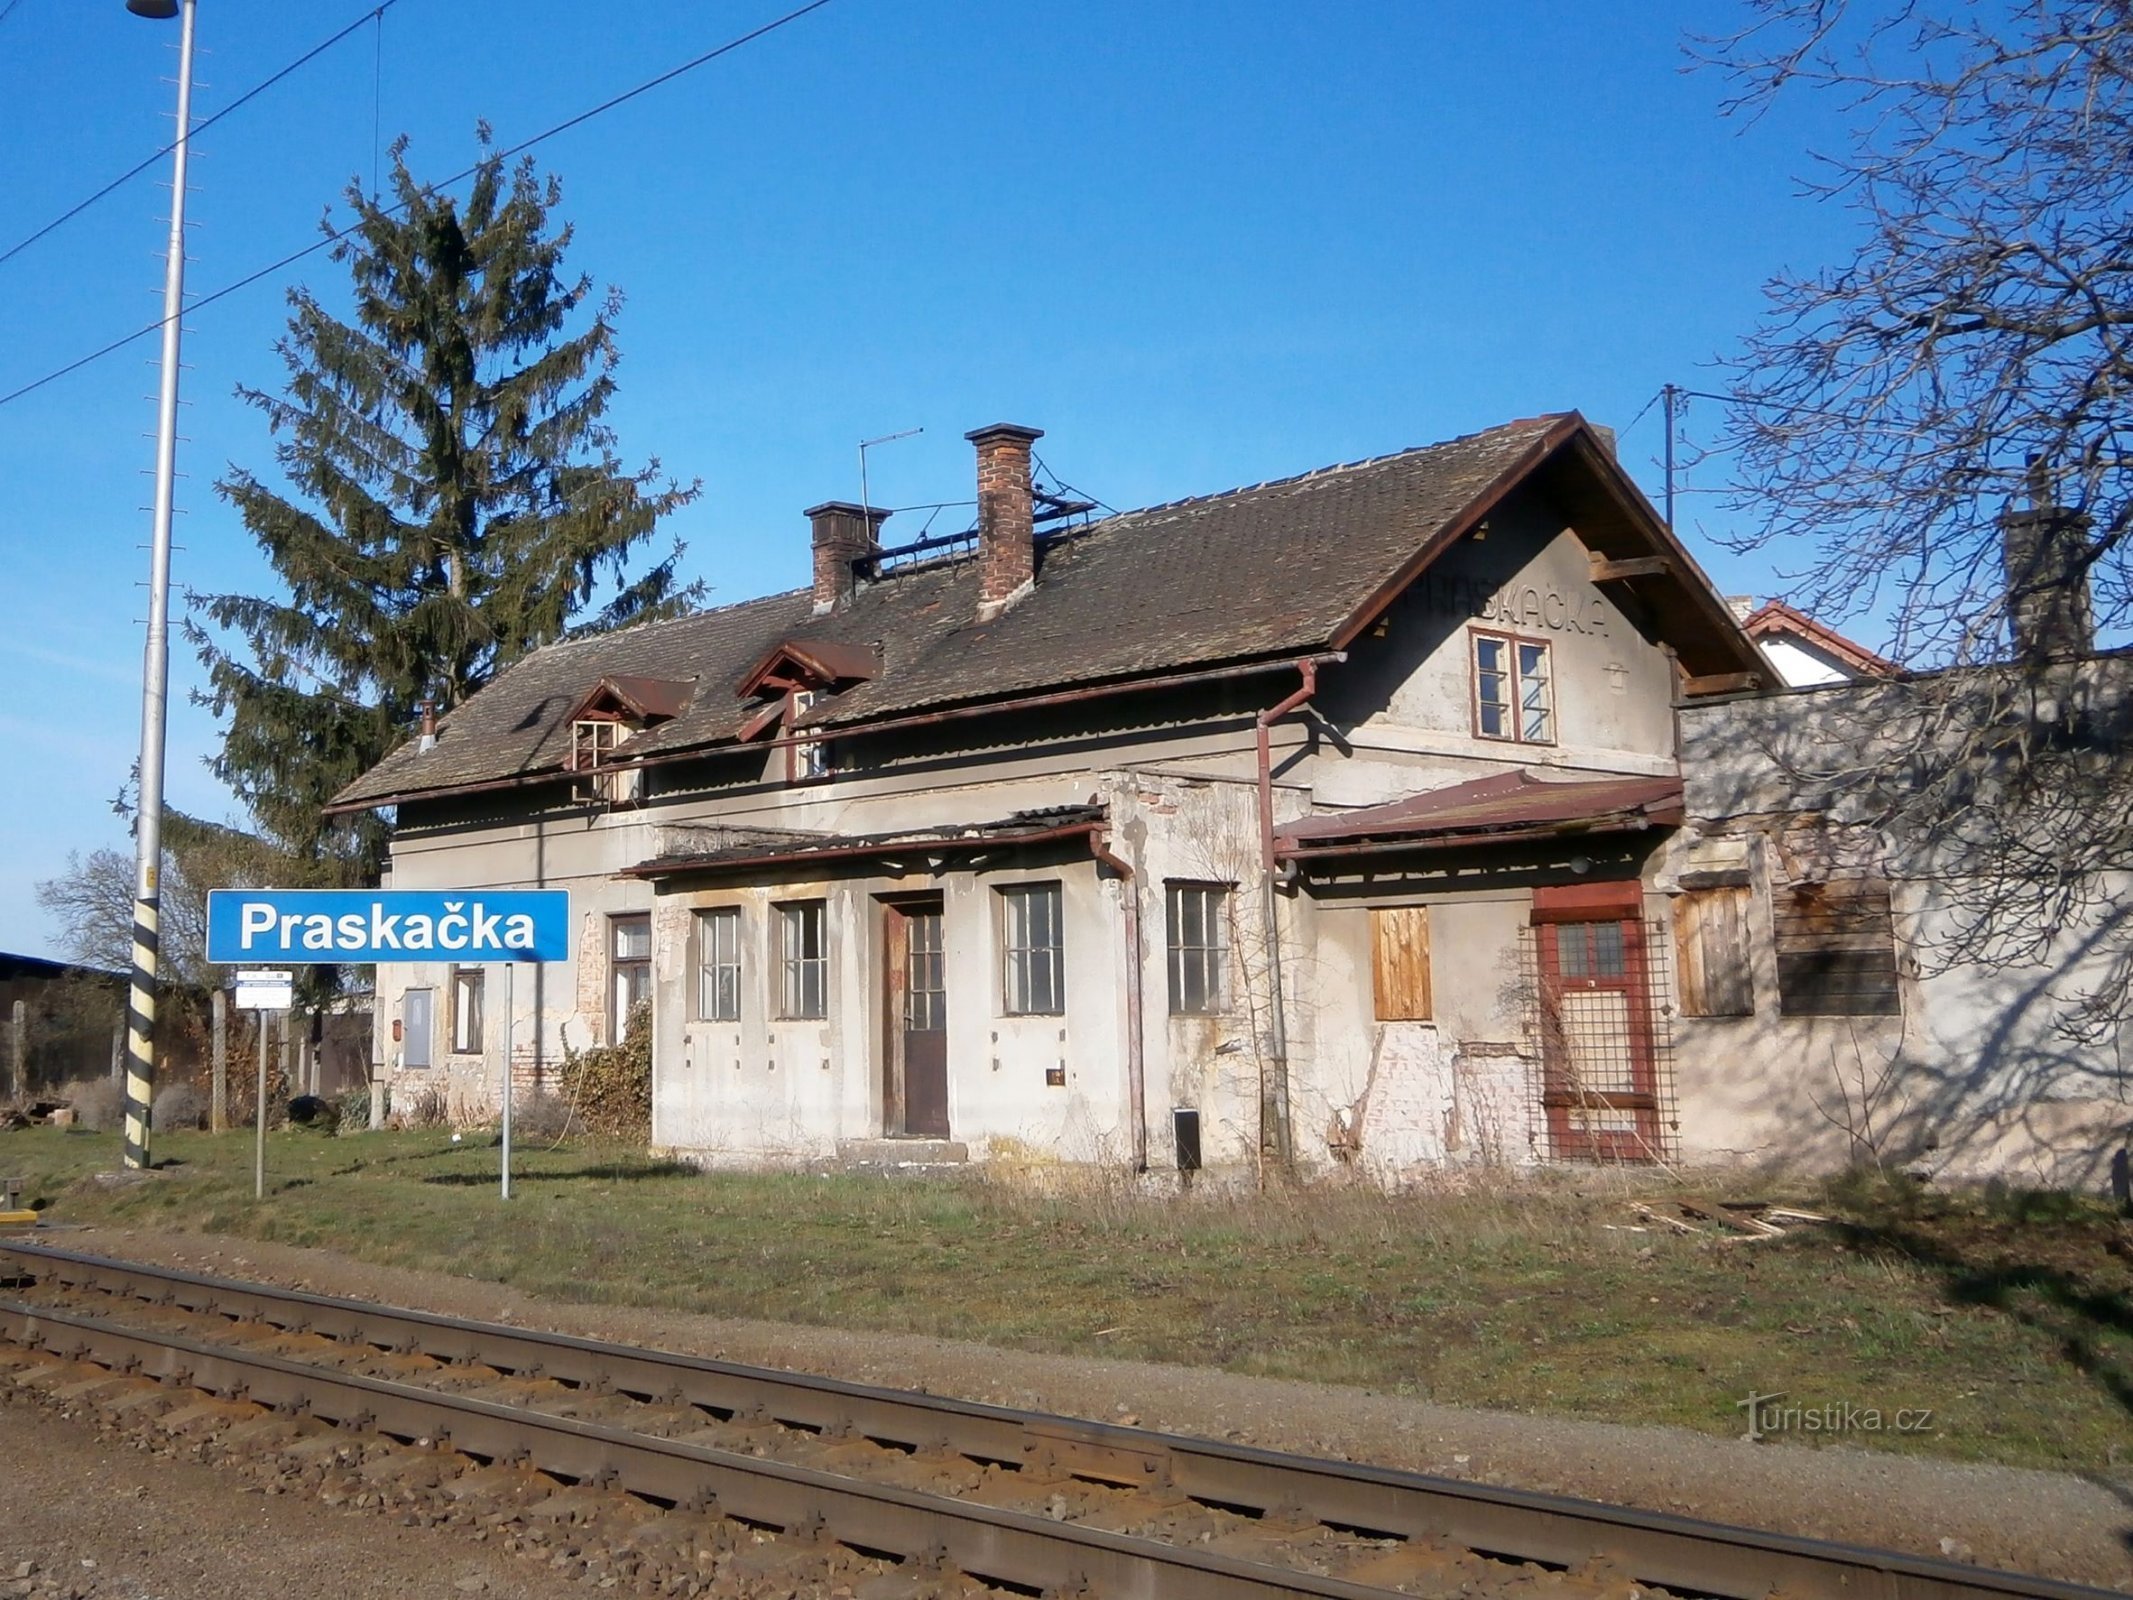 Redan riven gammal järnvägsstation (Praskačka, 26.3.2017/XNUMX/XNUMX)